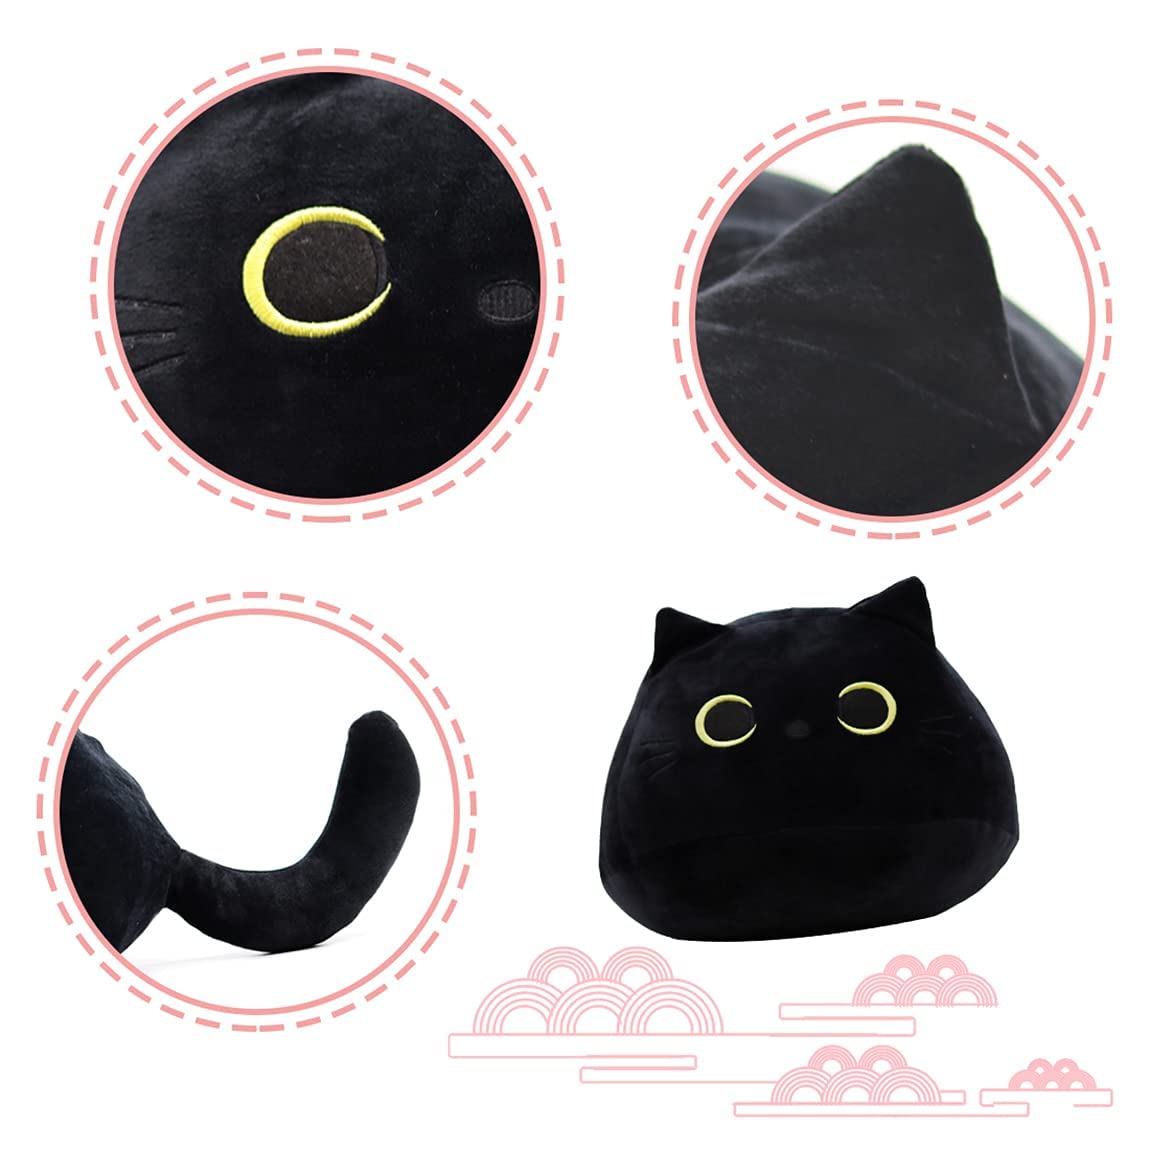 Aixini Halloween Soft Black Stuffed Cat Plush Toy Throw Pillow